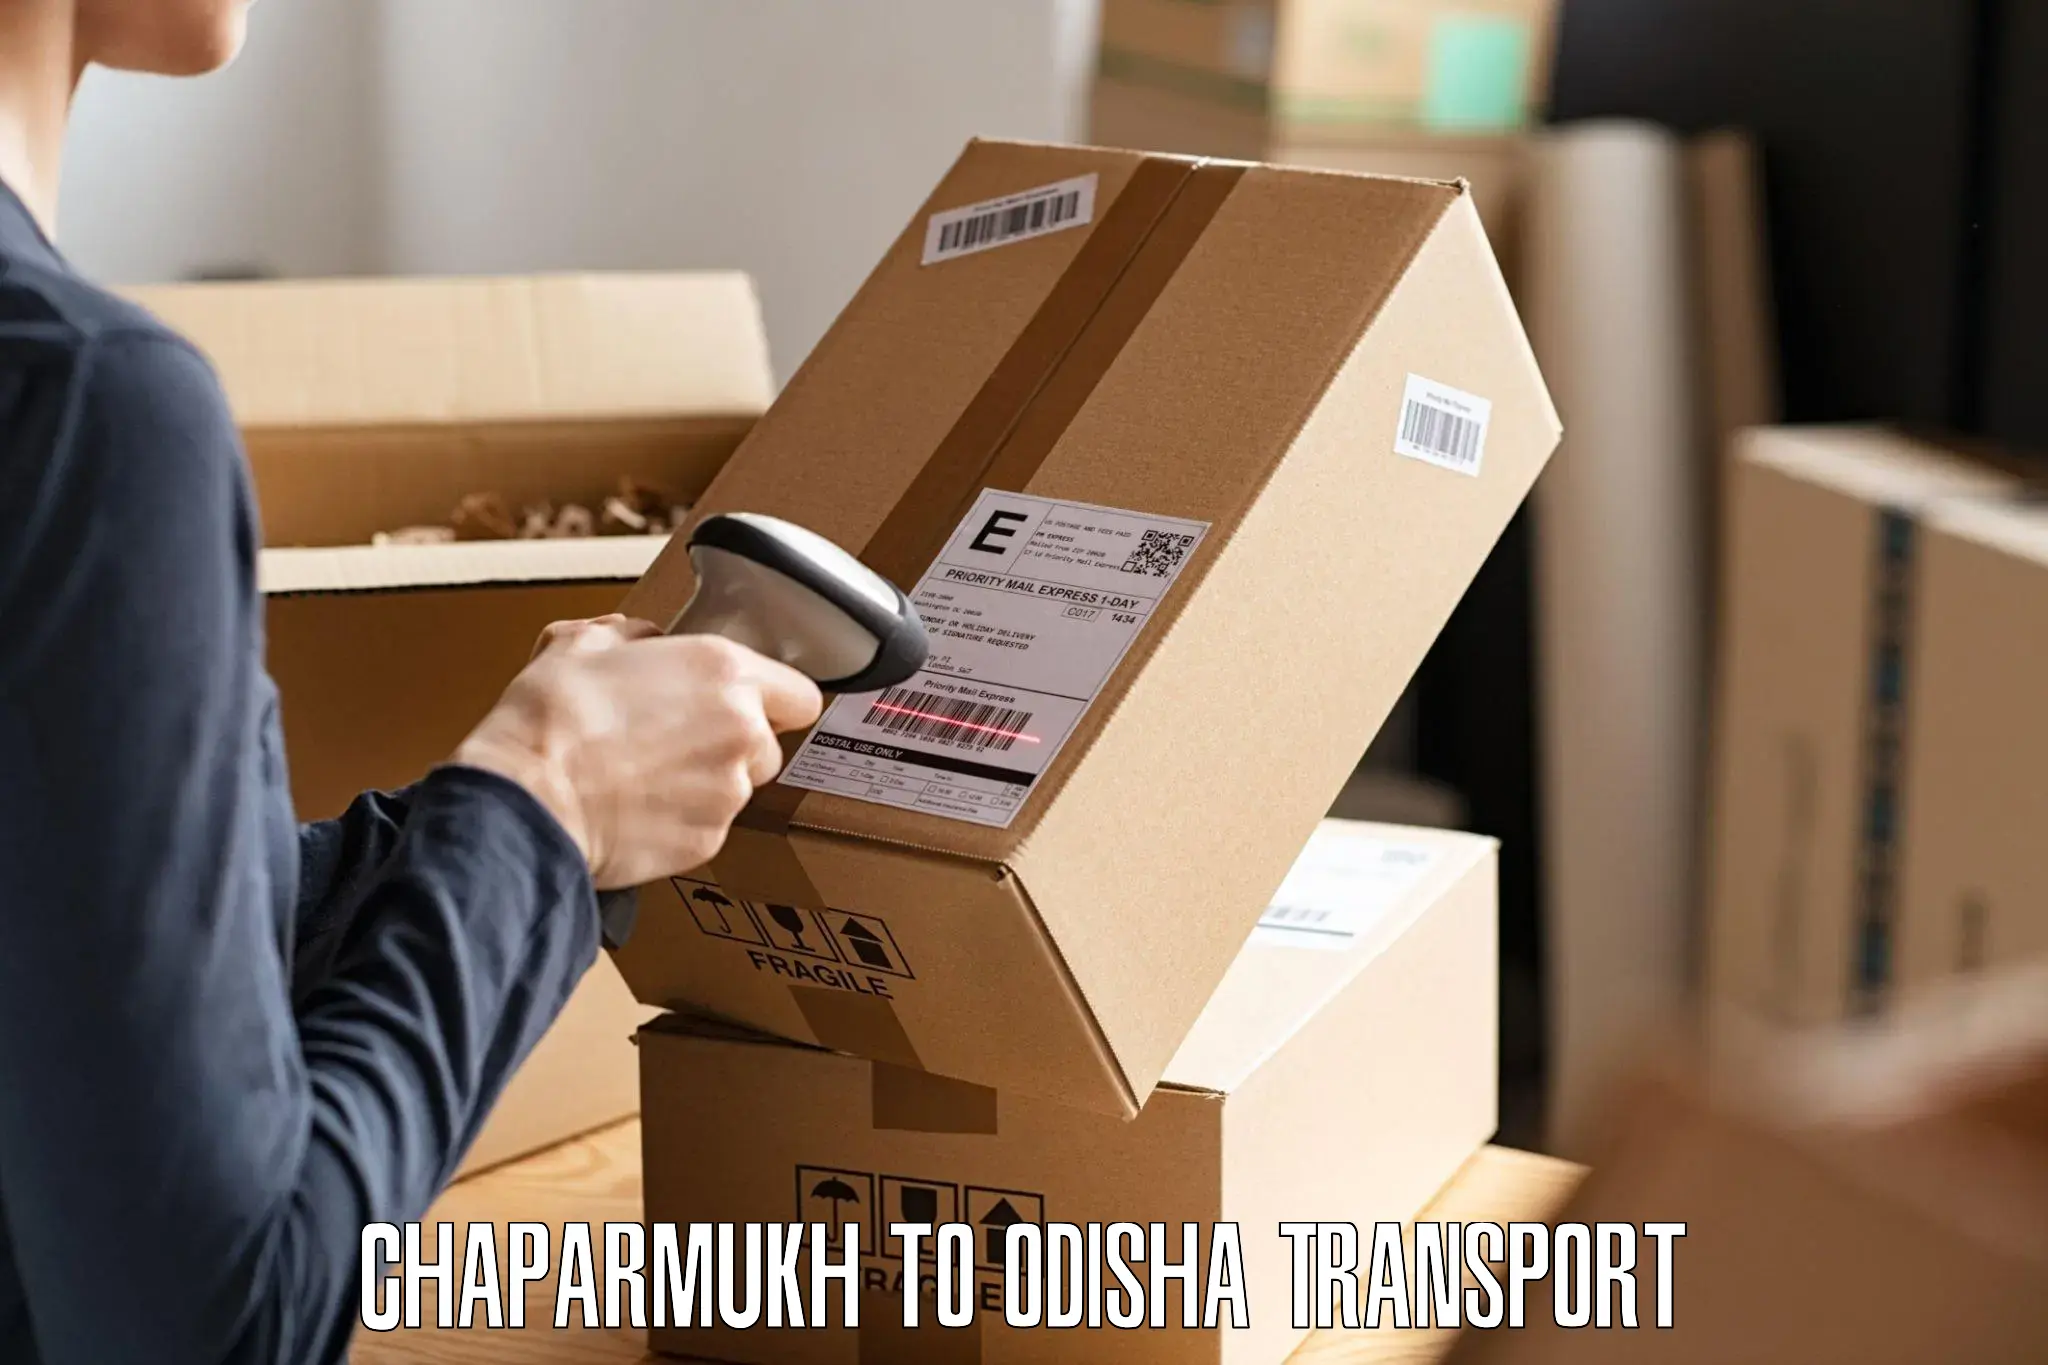 Parcel transport services Chaparmukh to Gajapati